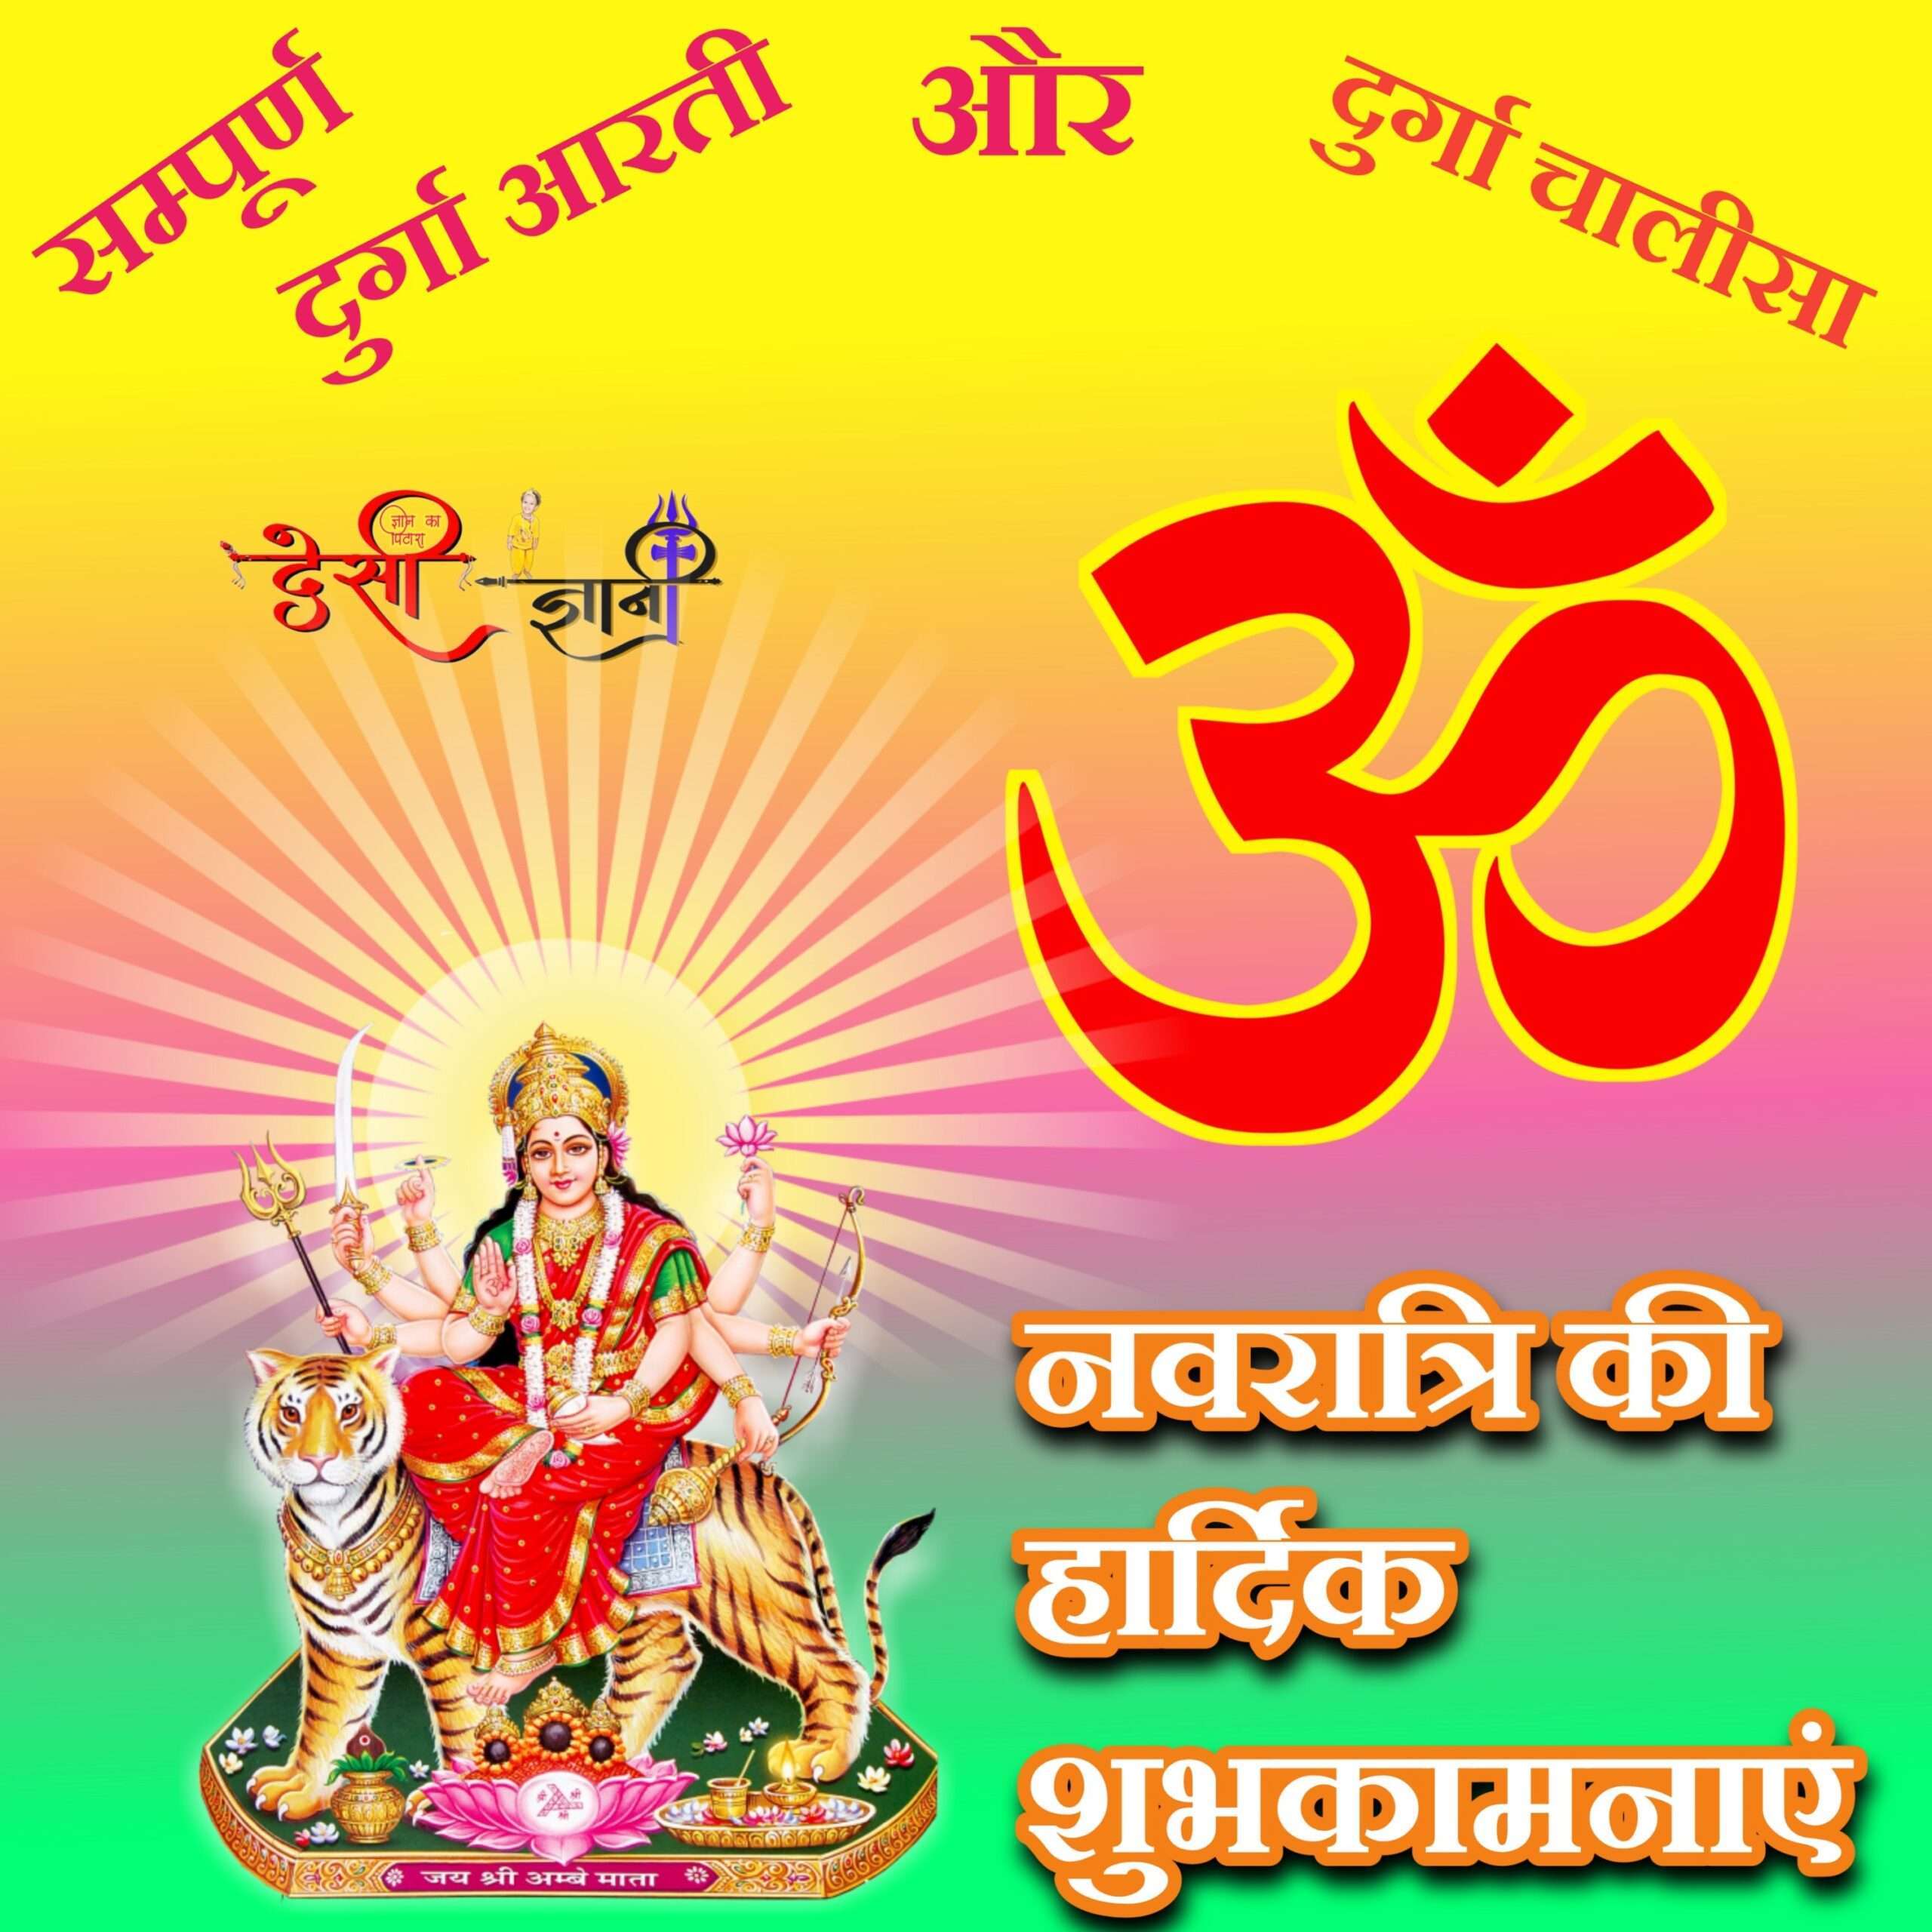 Ma Durga Chalisa and Durga Aarti Lyrics and HD Image । दुर्गा चालीसा और आरती डाउनलोड DesiGyani